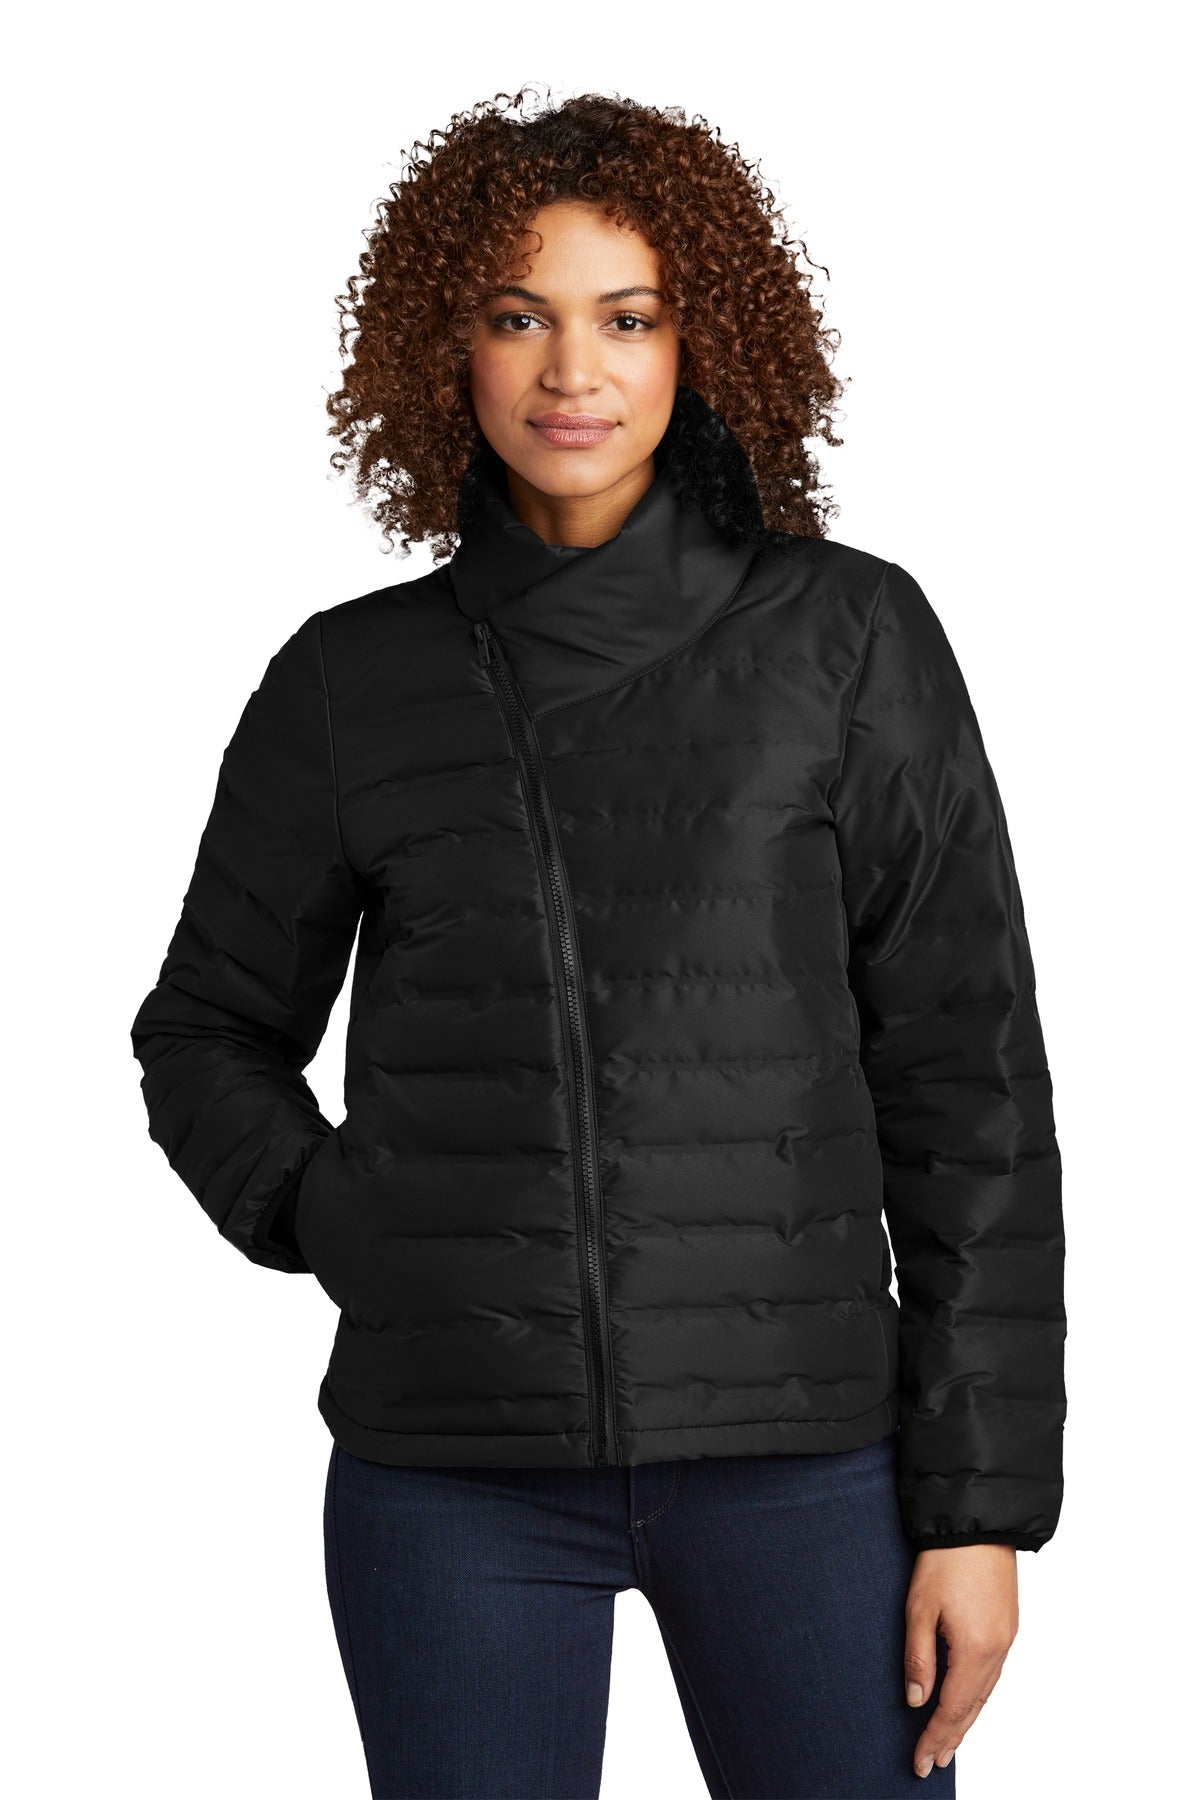 OGIO ® Ladies Street Puffy Full-Zip Jacket. LOG753 - DFW Impression